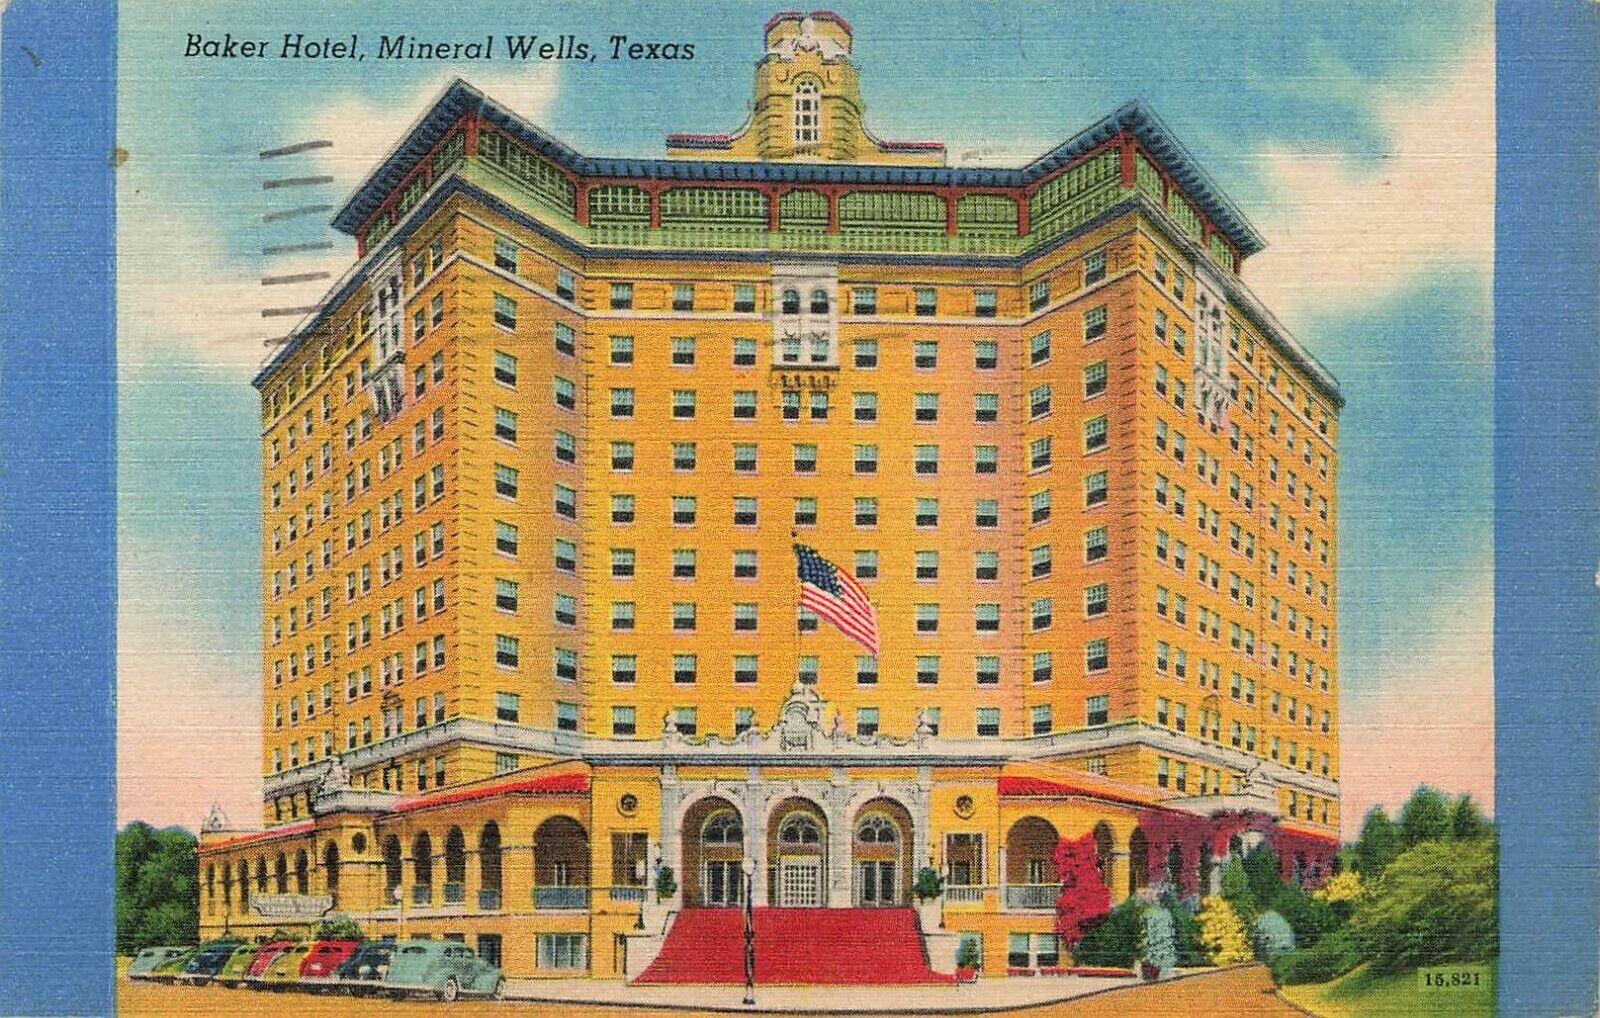 1947 TEXAS POSTCARD: VIEW OF BAKER HOTEL, MINERAL WELLS, TX